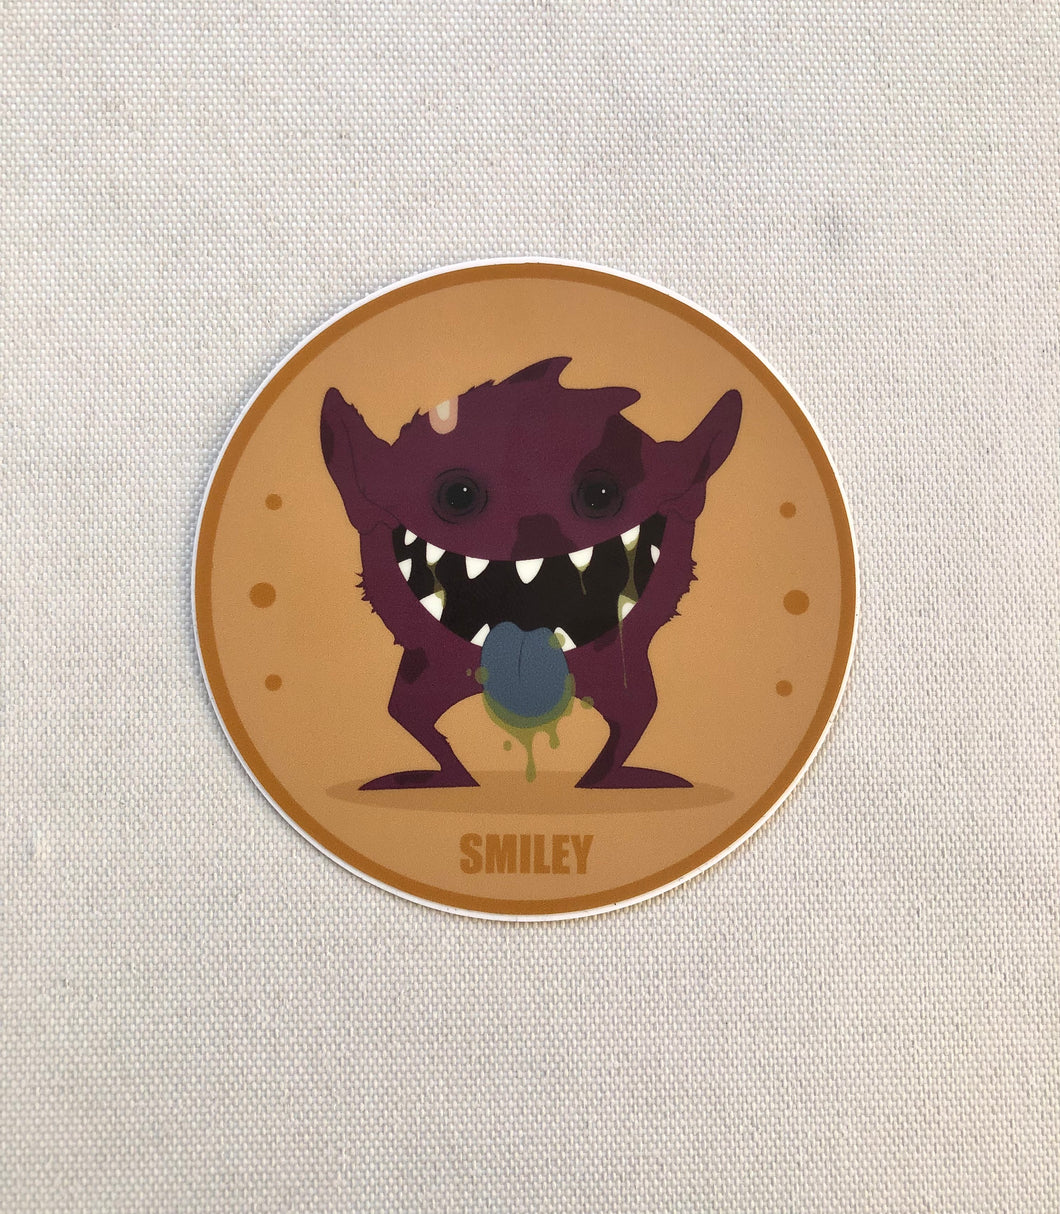 Smiley Vinyl Circle Sticker